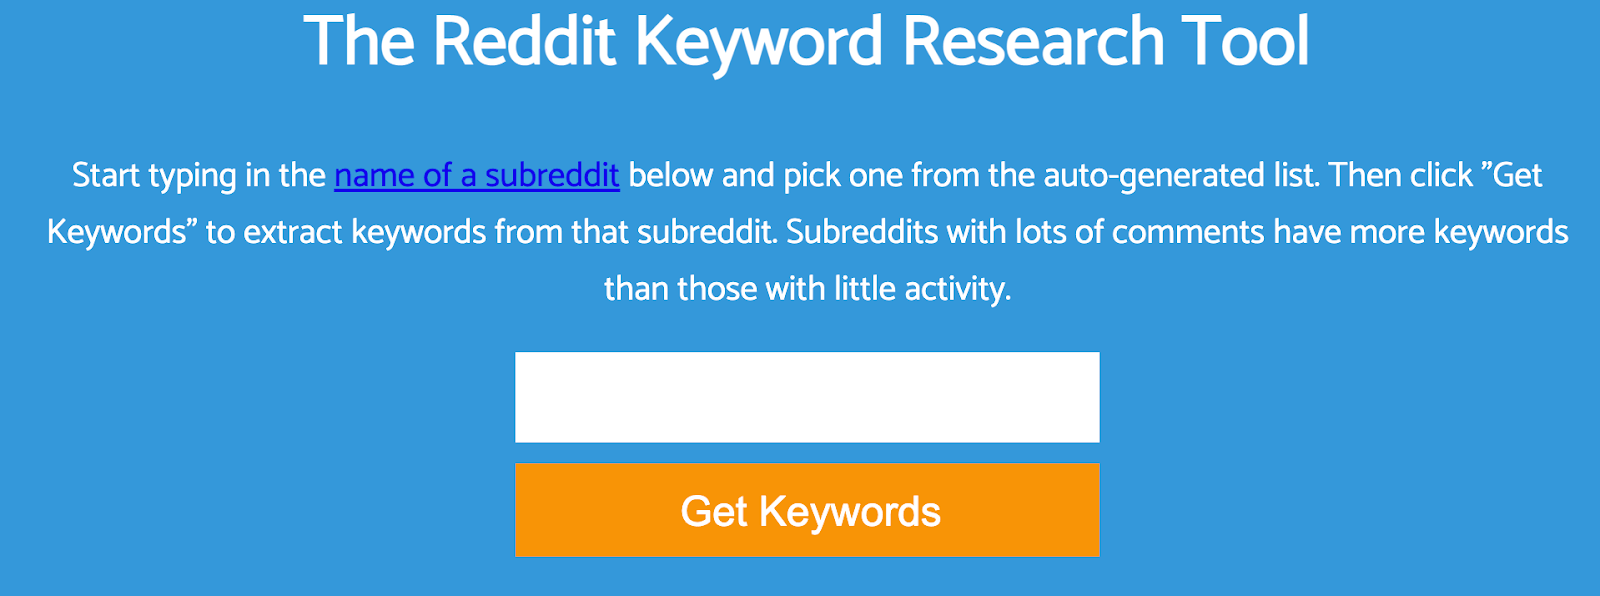 Keyworddit research tool 